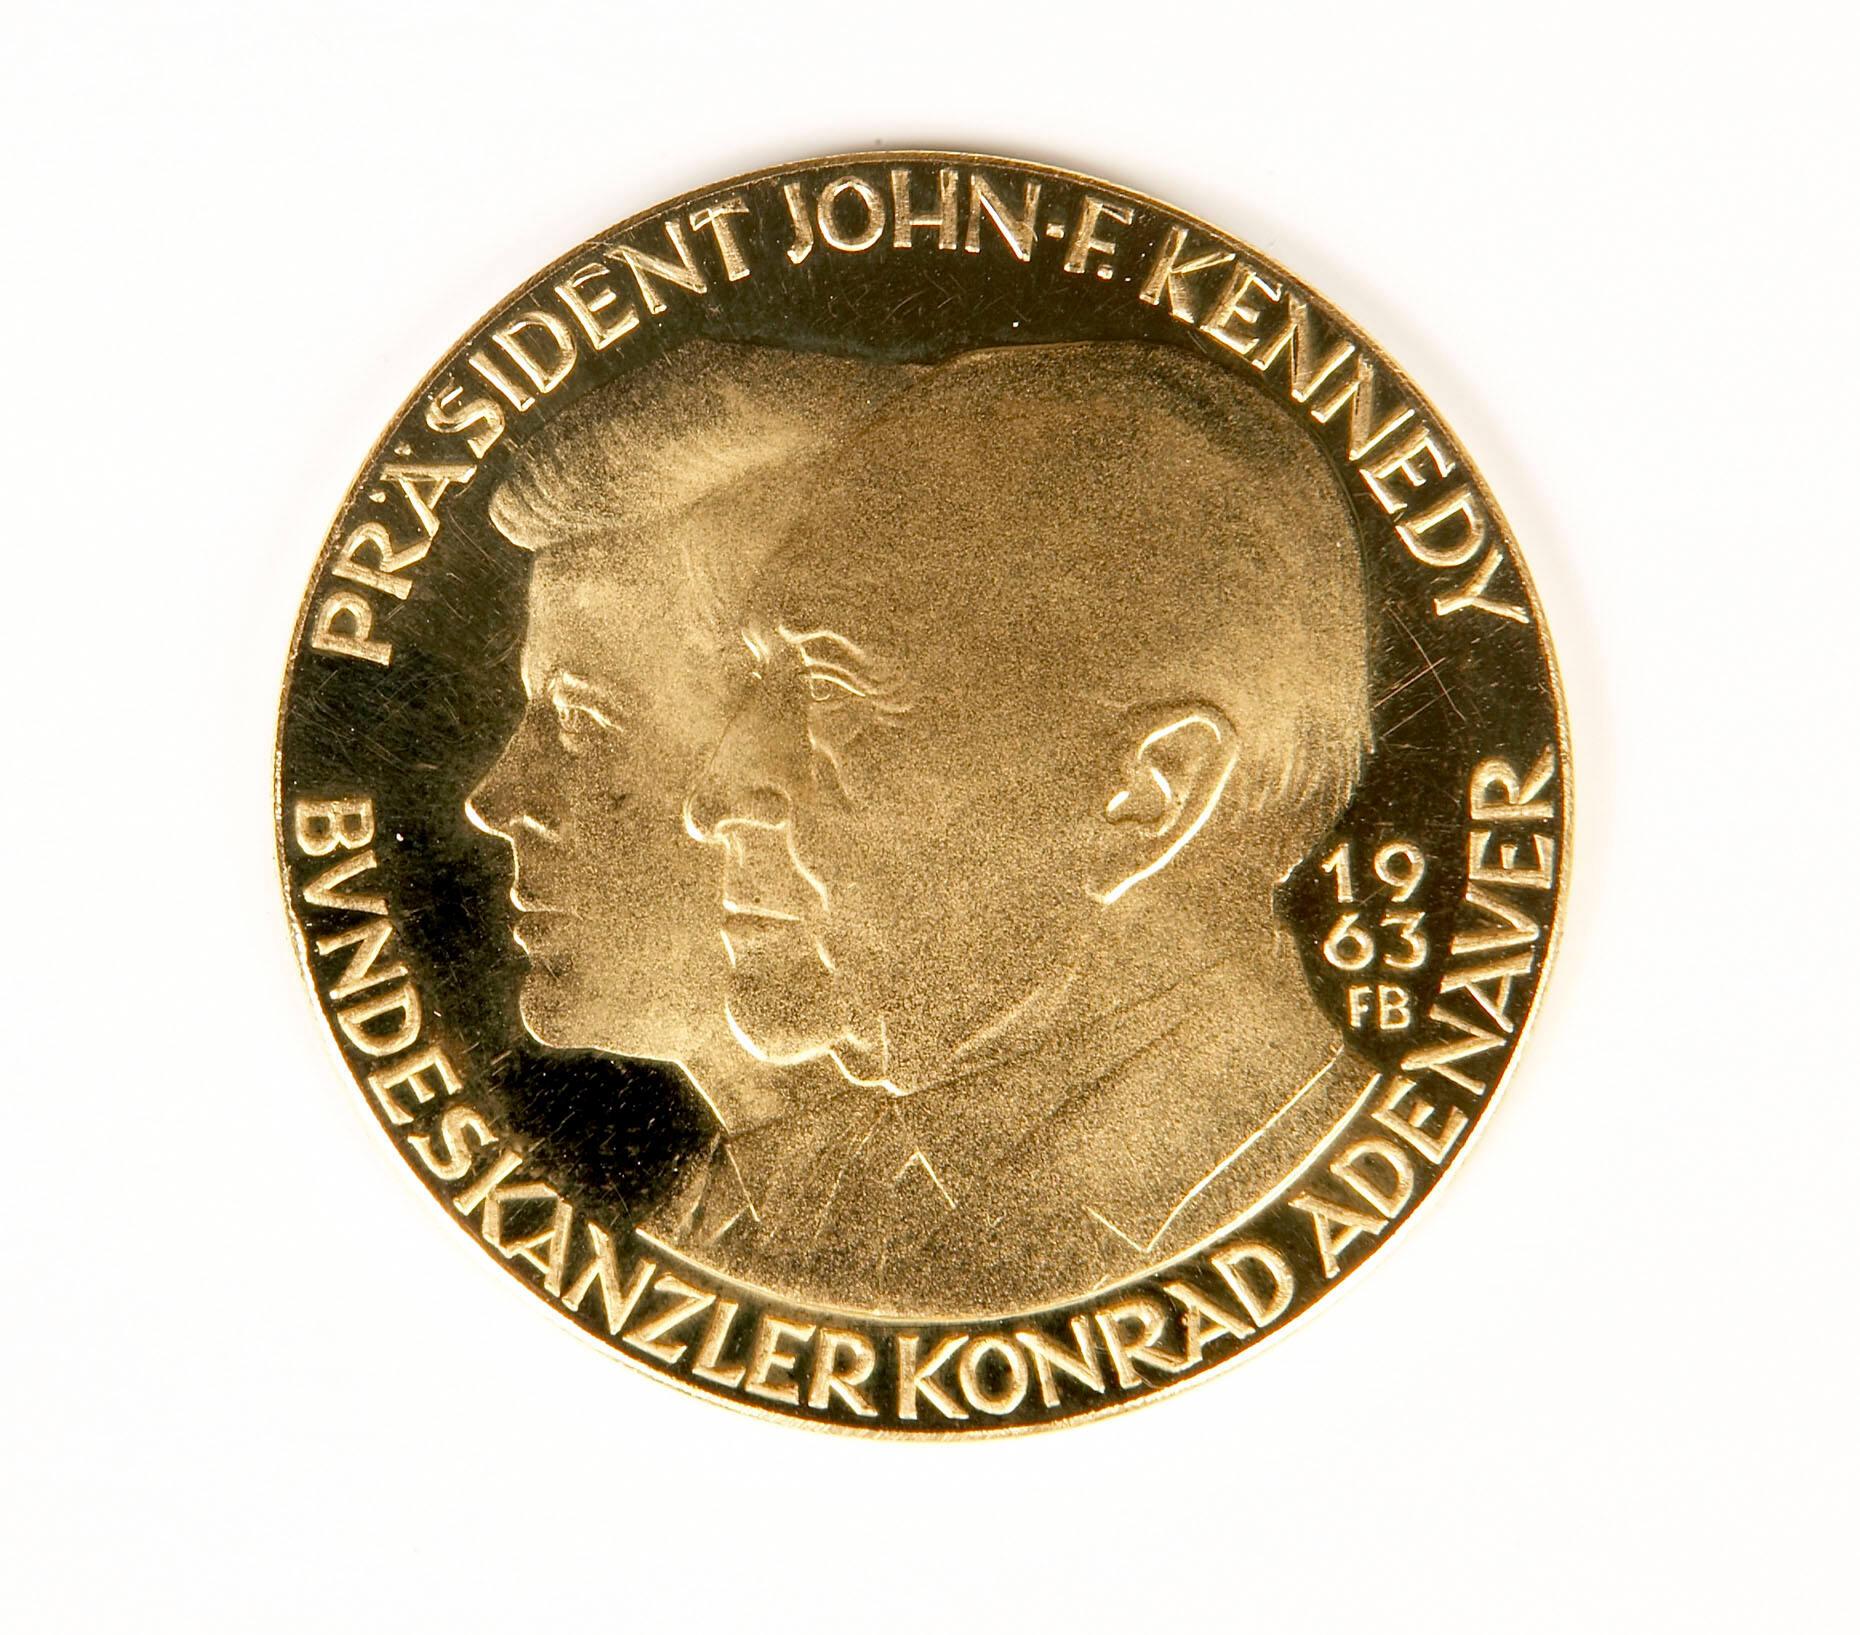 John F Kennedy And Konrad Adenauer Medal All Artifacts The John F Kennedy Presidential